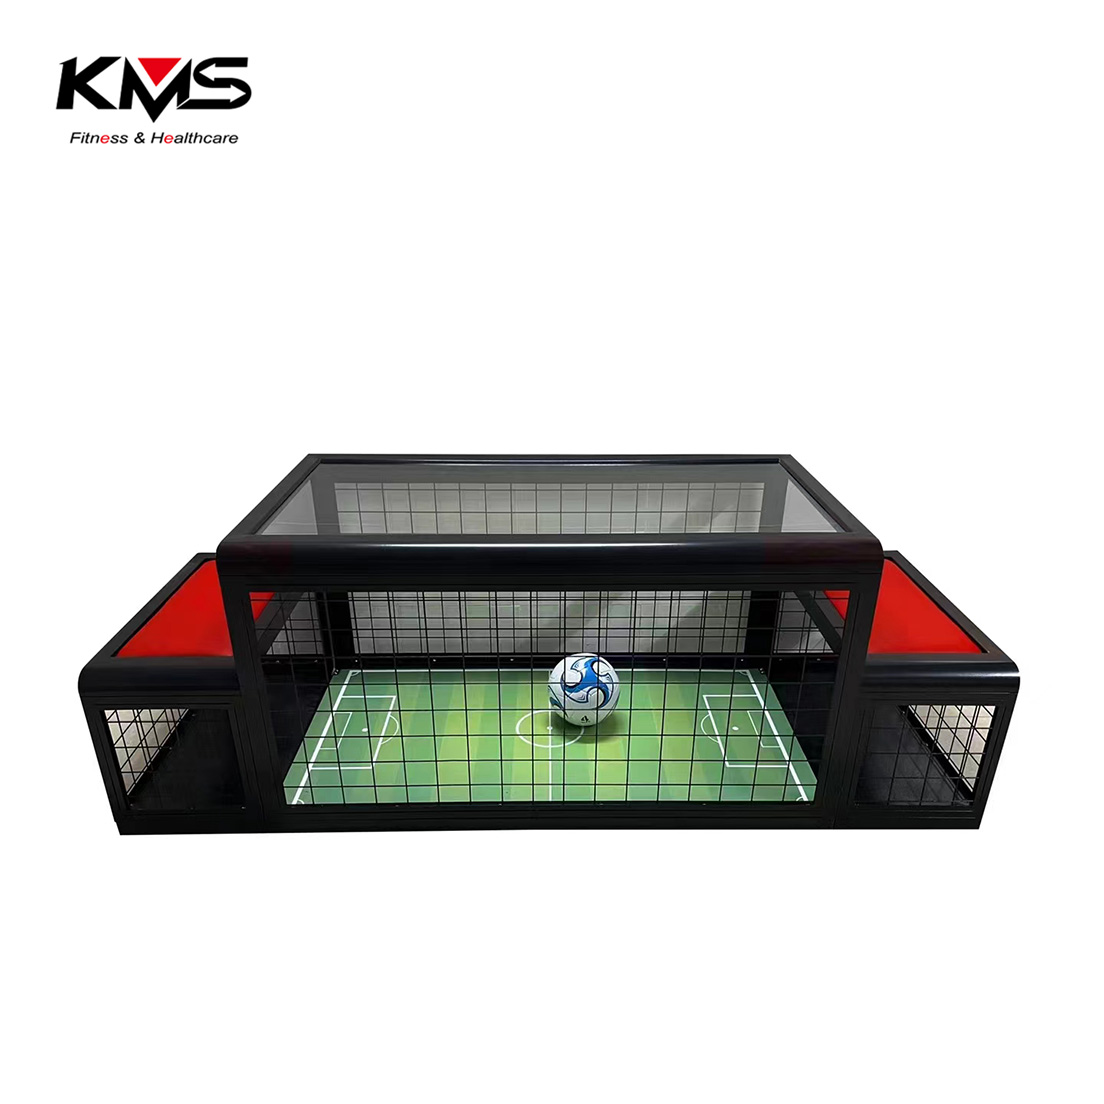 Фудбалска машина, опрема за спортске игре, испод стоног фудбала